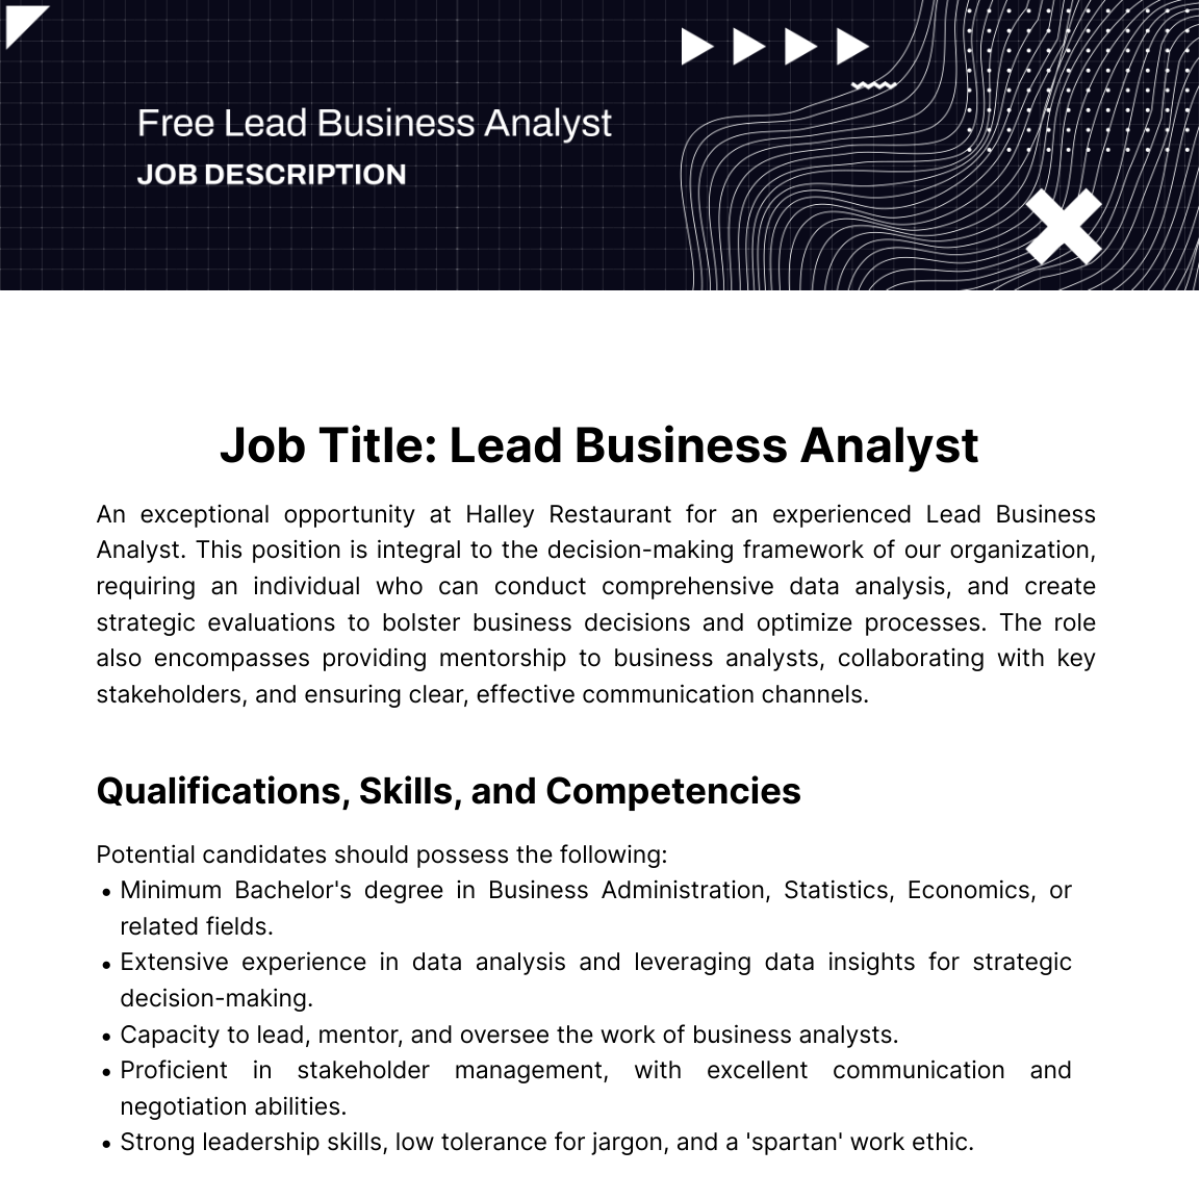 Lead Business Analyst Job Description Template